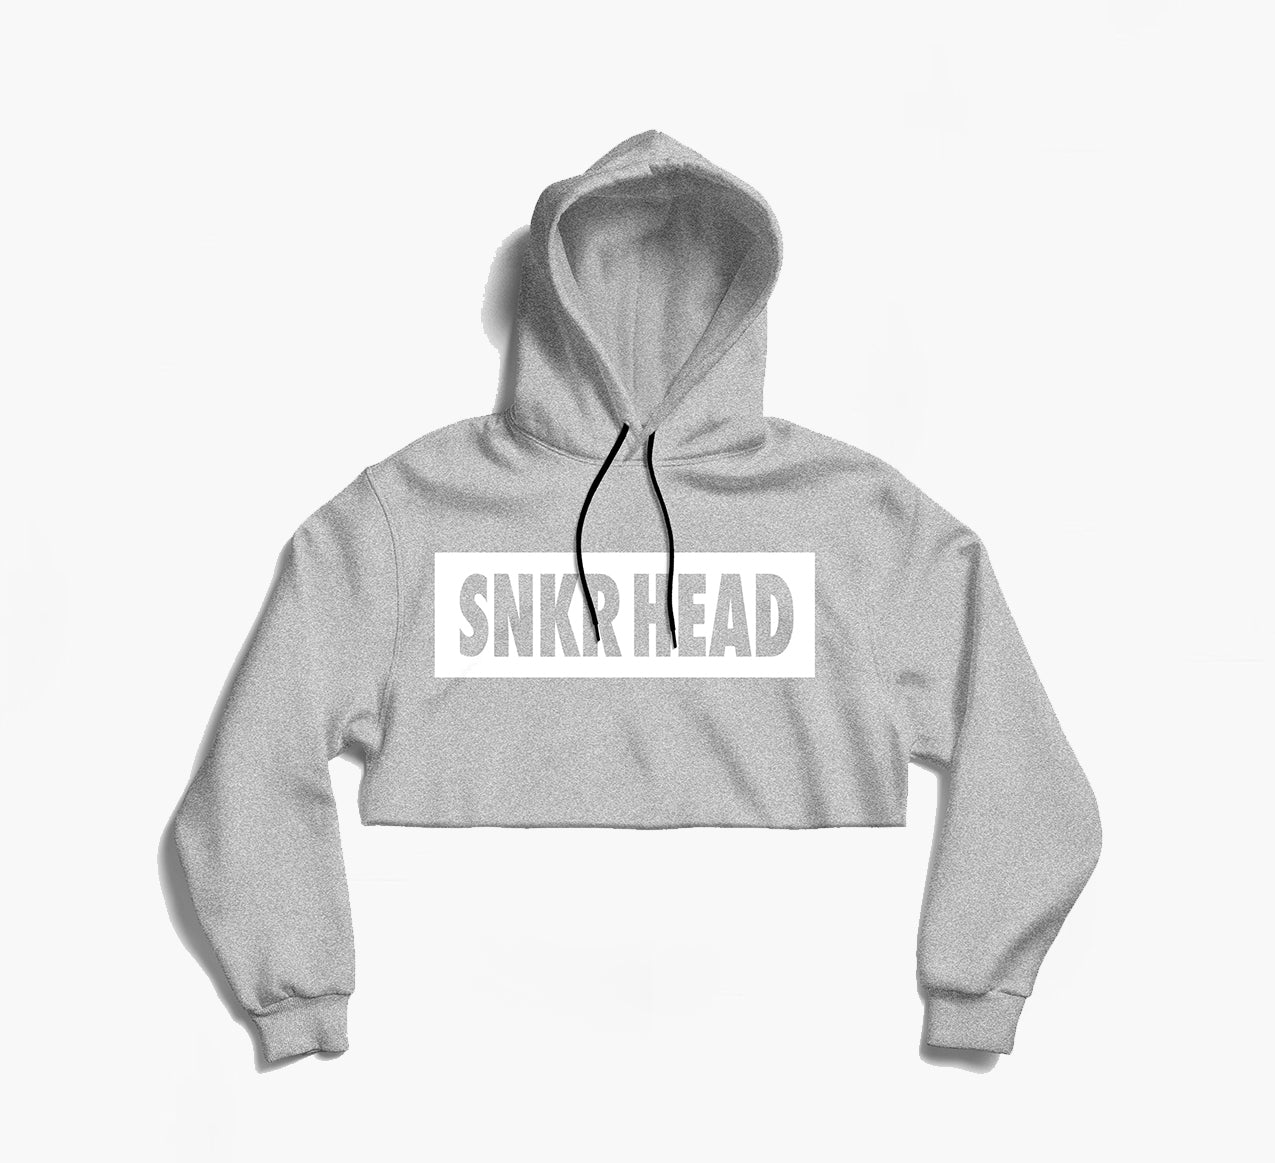 SNKR HEAD Box Logo Grey Crop Hoodie (white)